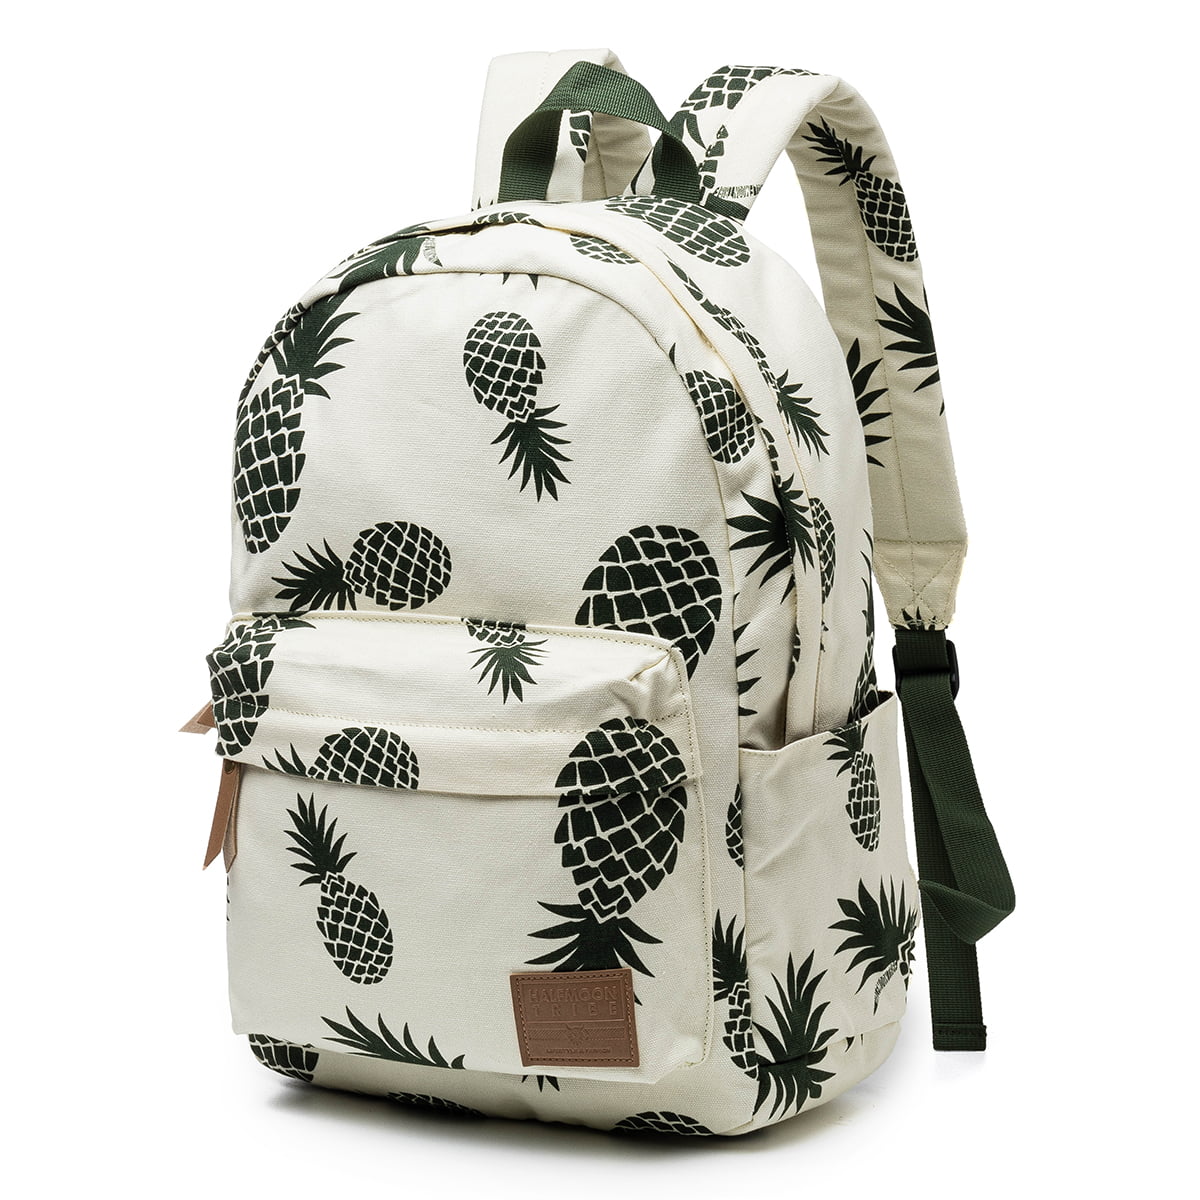 Holds 14-inch Laptop Laptop Backpacks College School Bookbag Travel Hiking Camping Daypack for Women Men Pineapple Pattern 10.5x5.5x15 